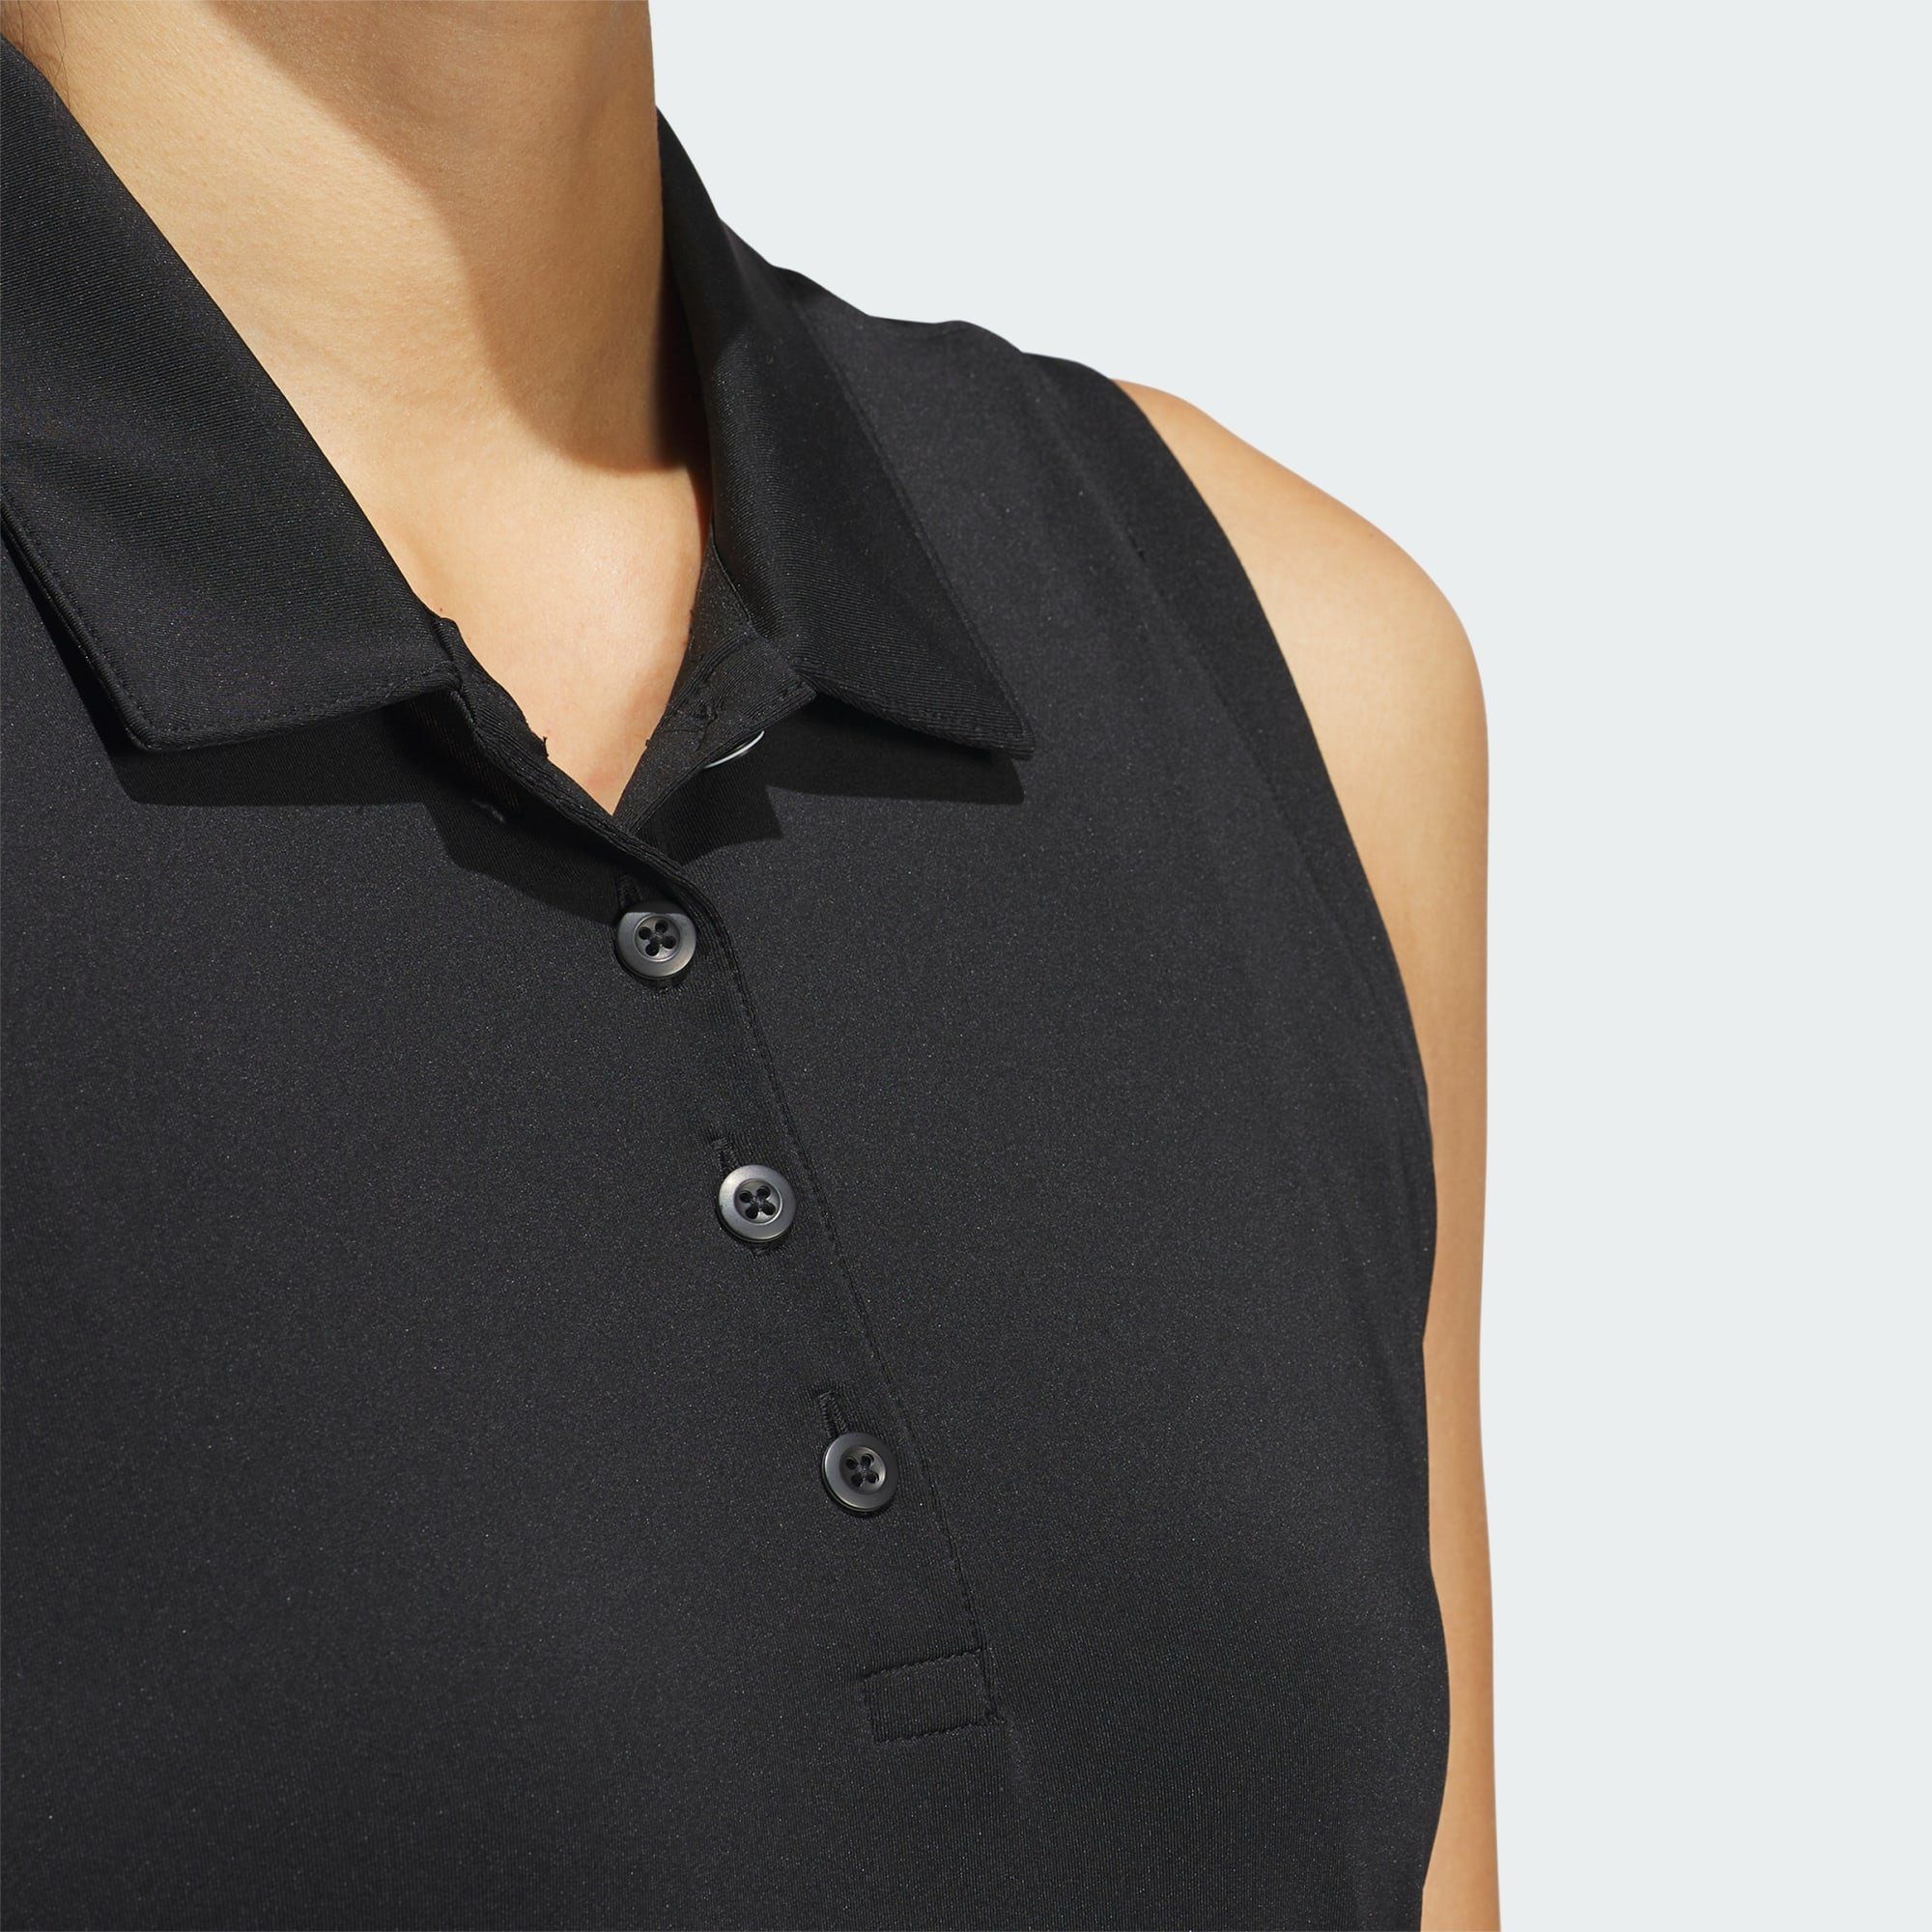 Poloshirt SLEEVELESS Black POLO ULTIMATE365 SHIRT SOLID Performance adidas